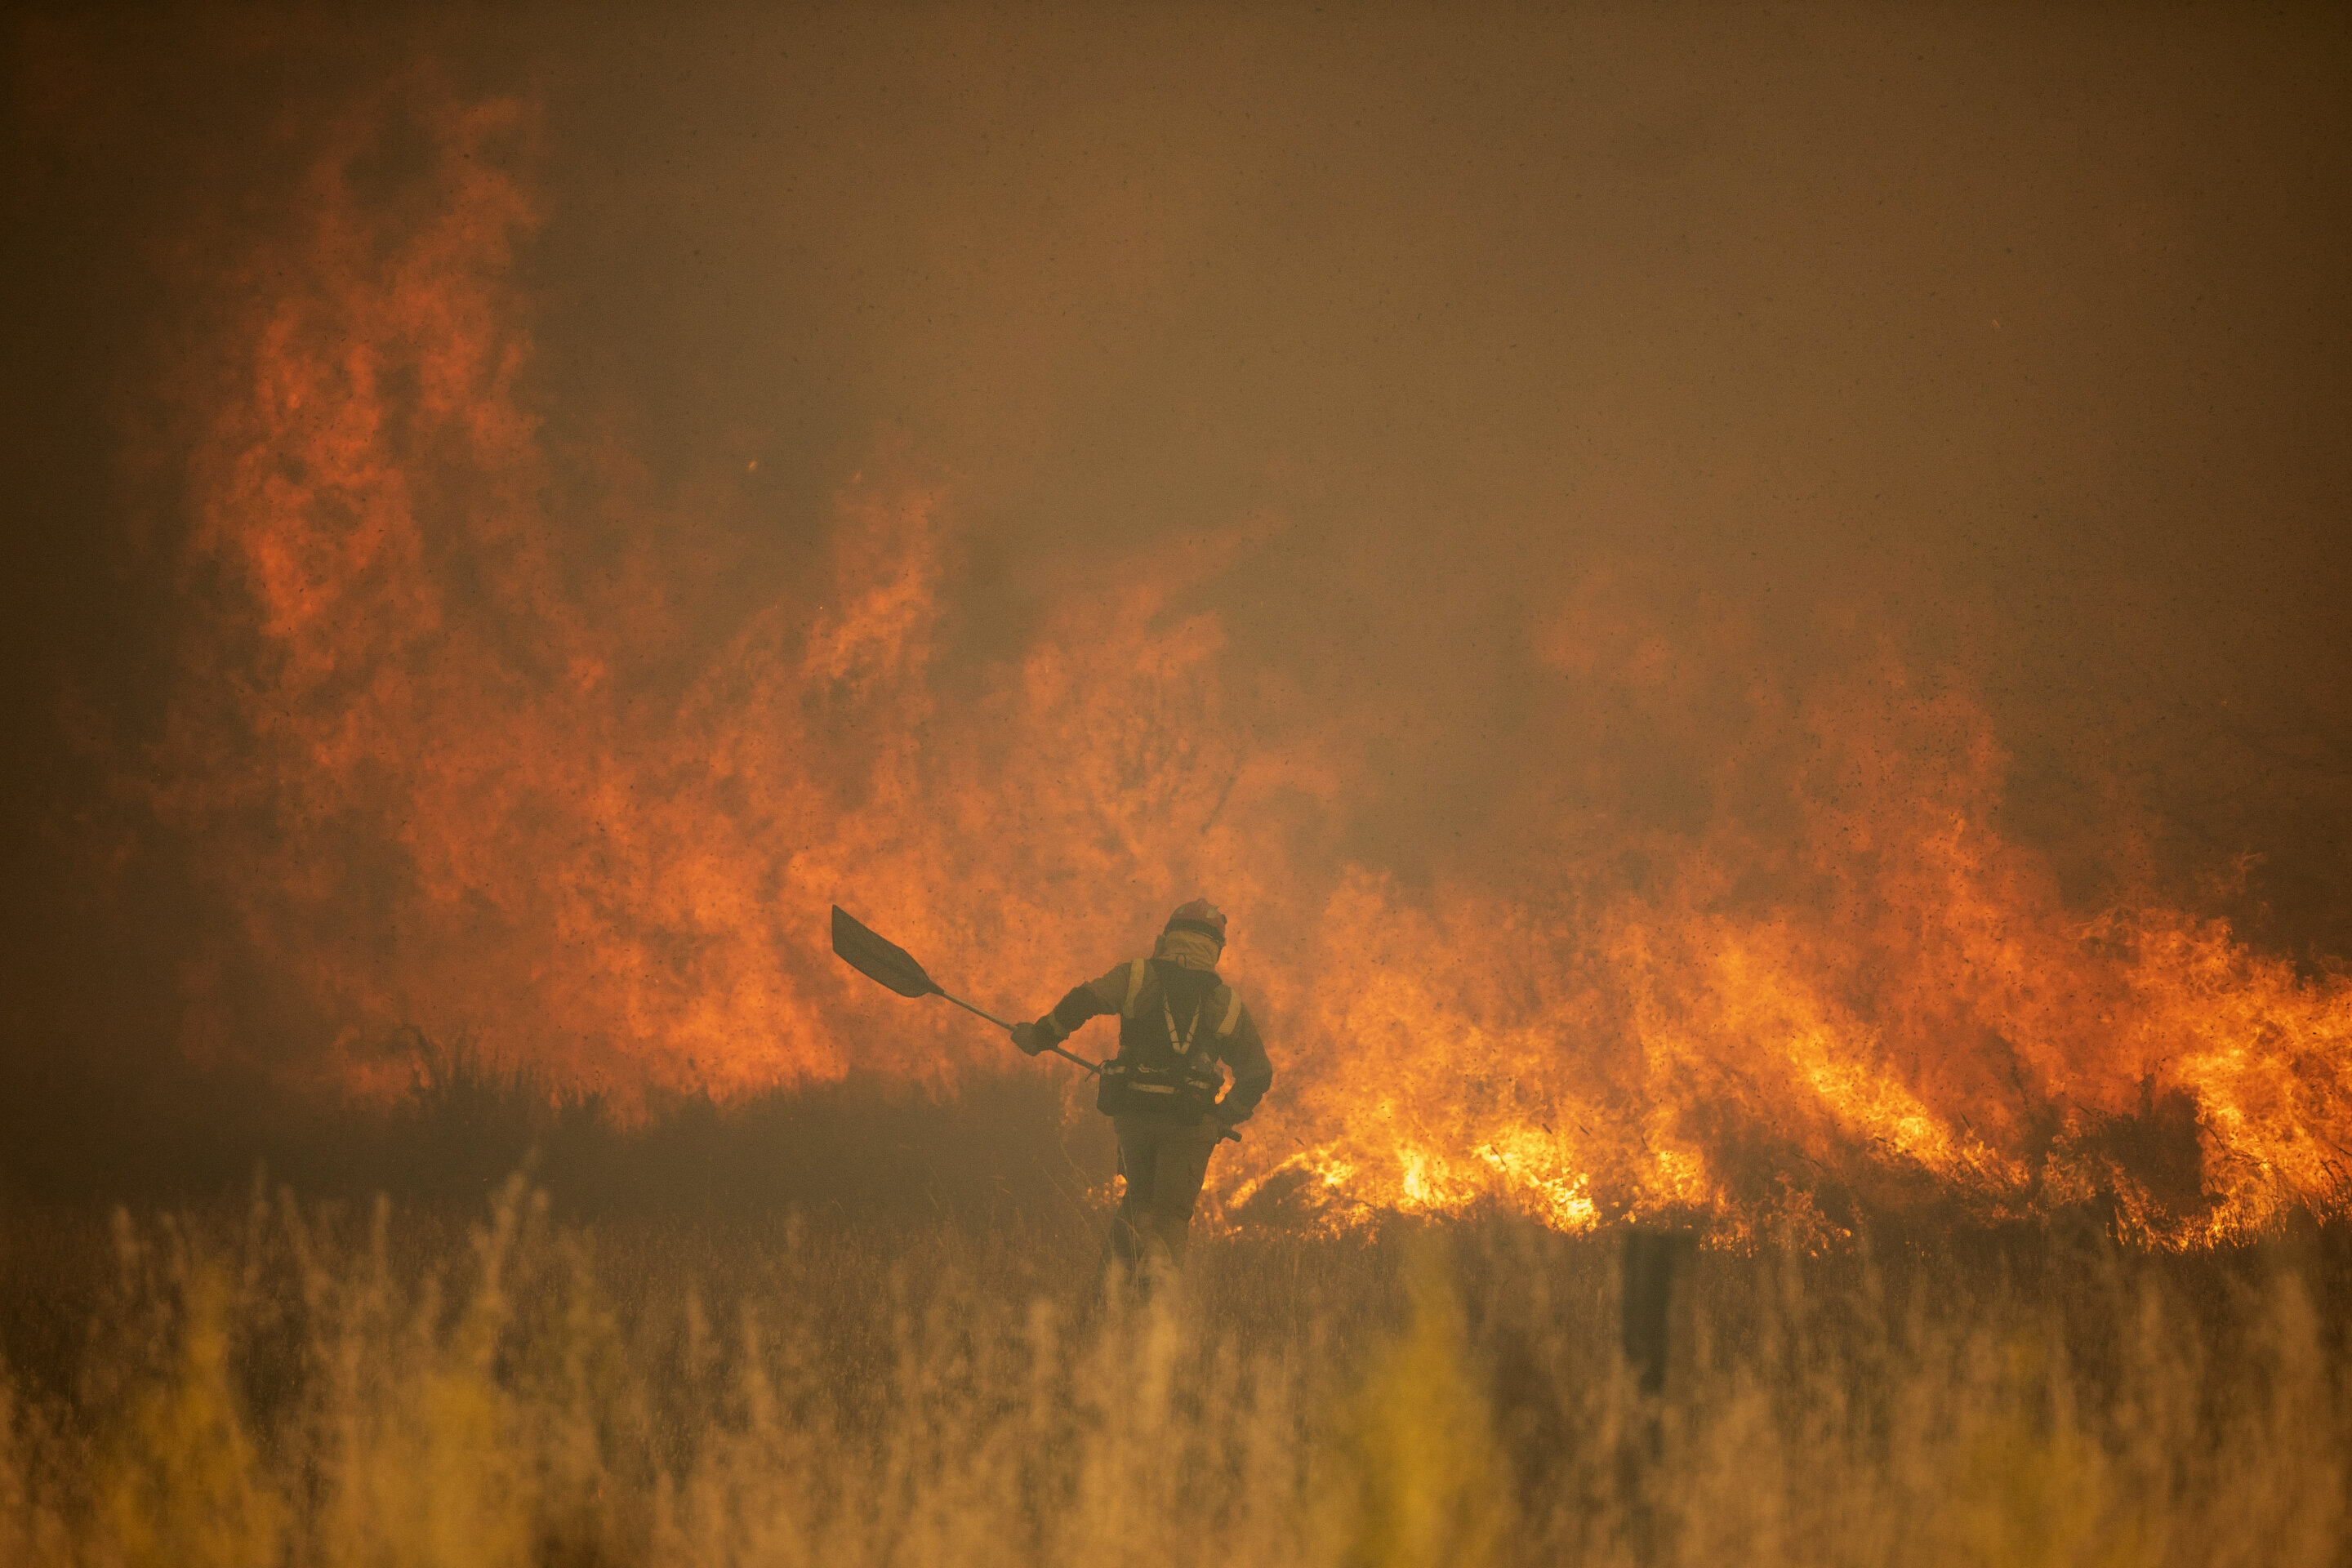 #Spain, Germany battle wildfires amid unusual heat wave